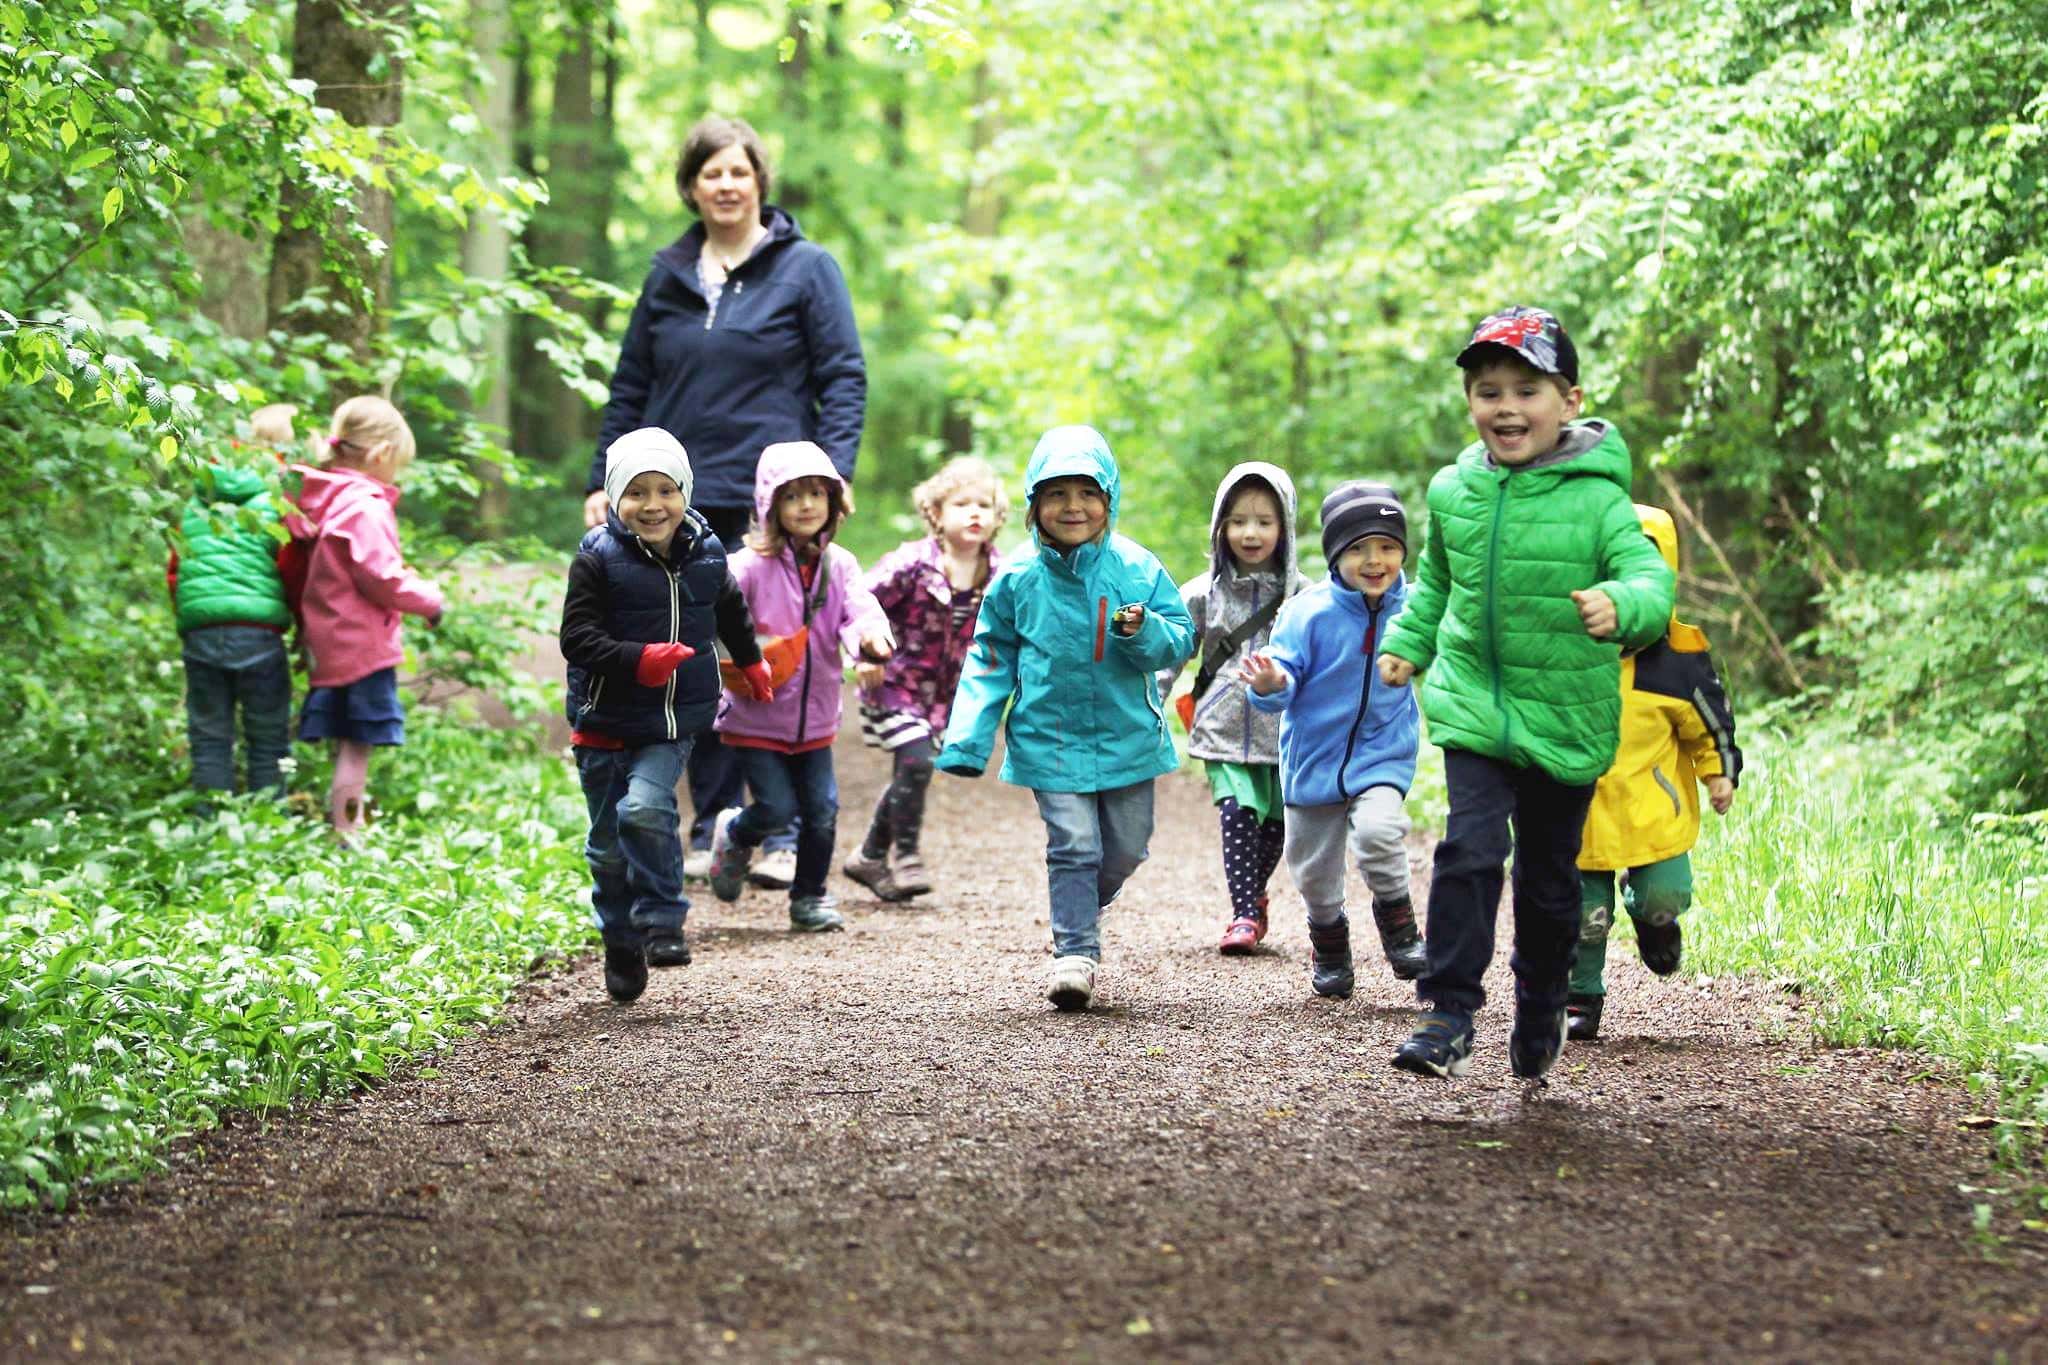 Waldlauf, Jogging, Kipchoge:Ausdaueraktivitäten mit Kita-Kindern